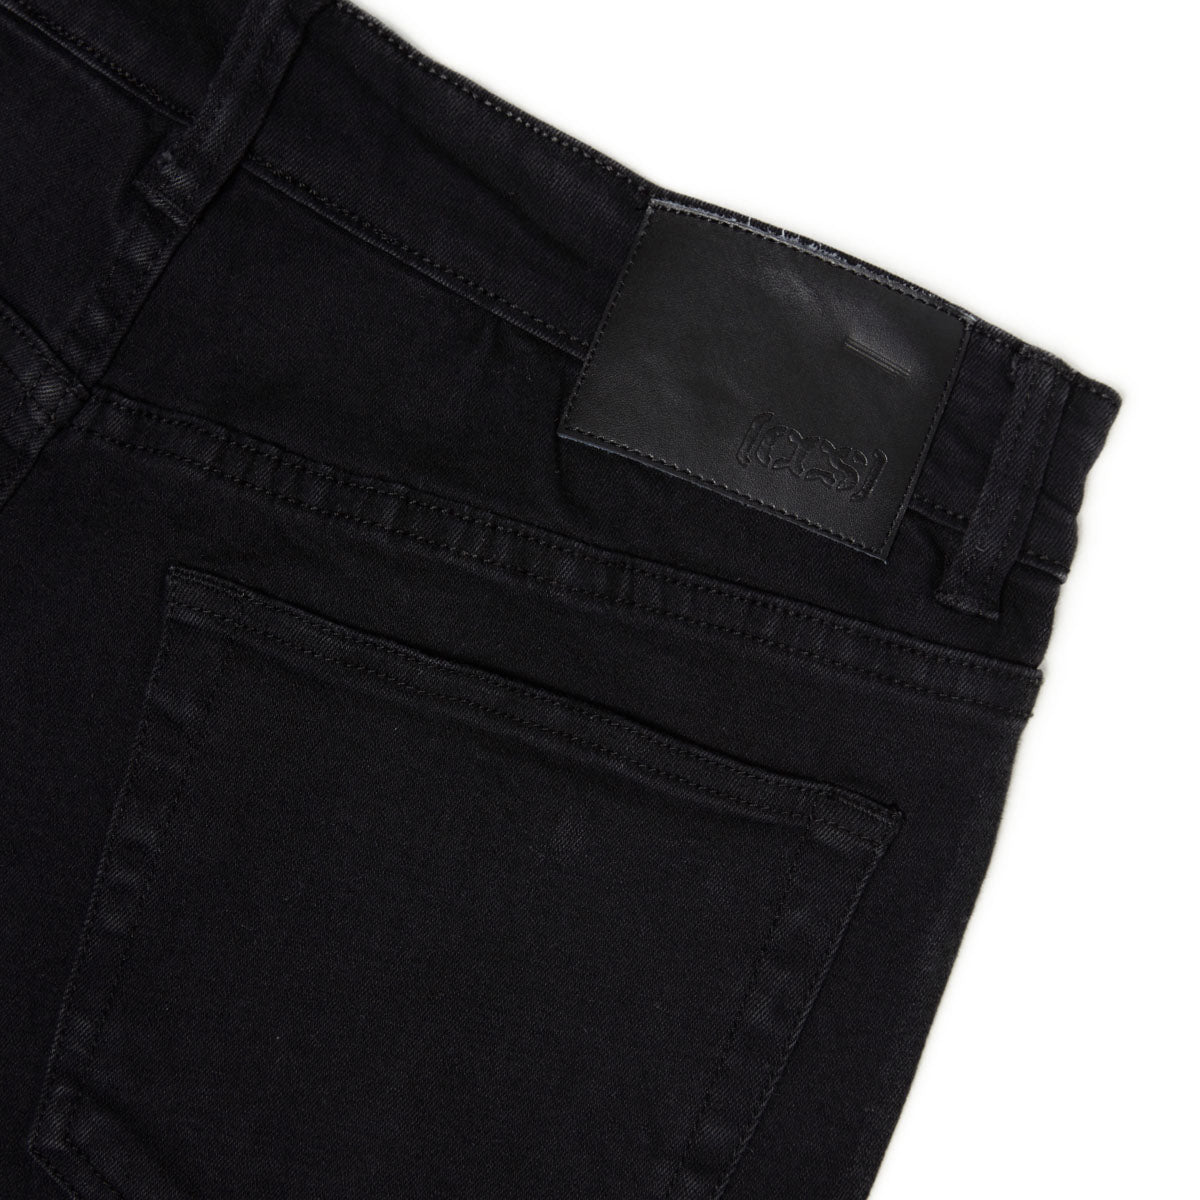 CCS Standard Plus Skinny Denim Jeans - Overdyed Black image 6